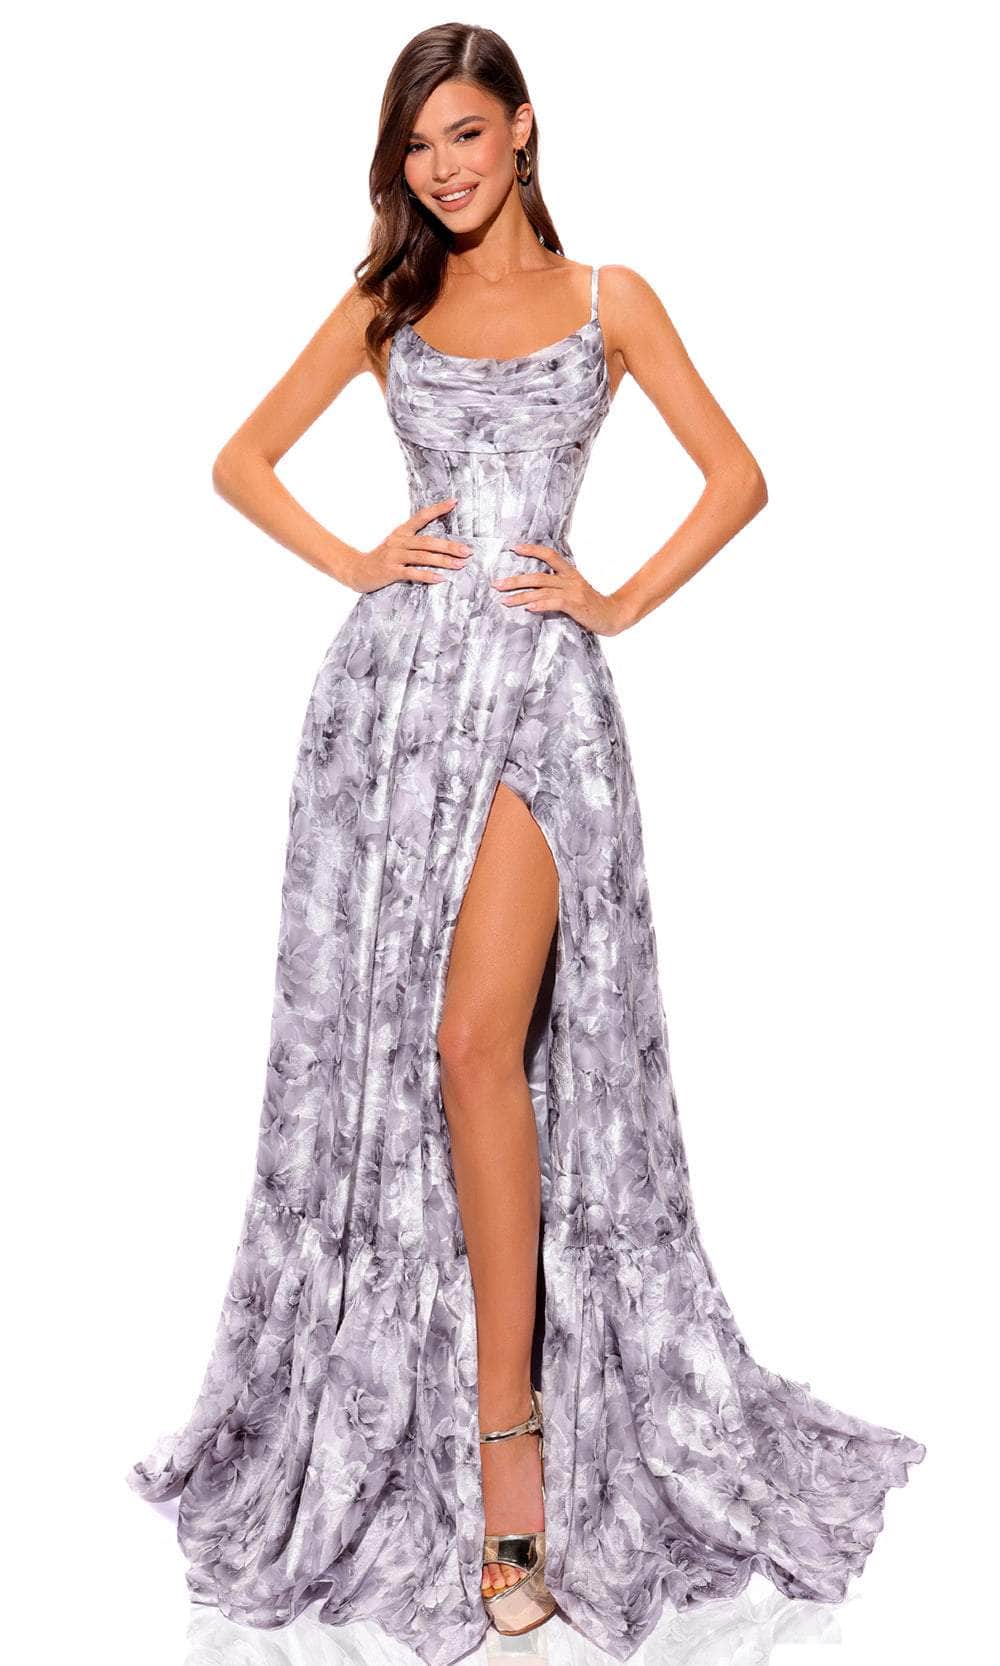 Amarra 88848 - Floral Printed Scoop Neck Prom Dress
